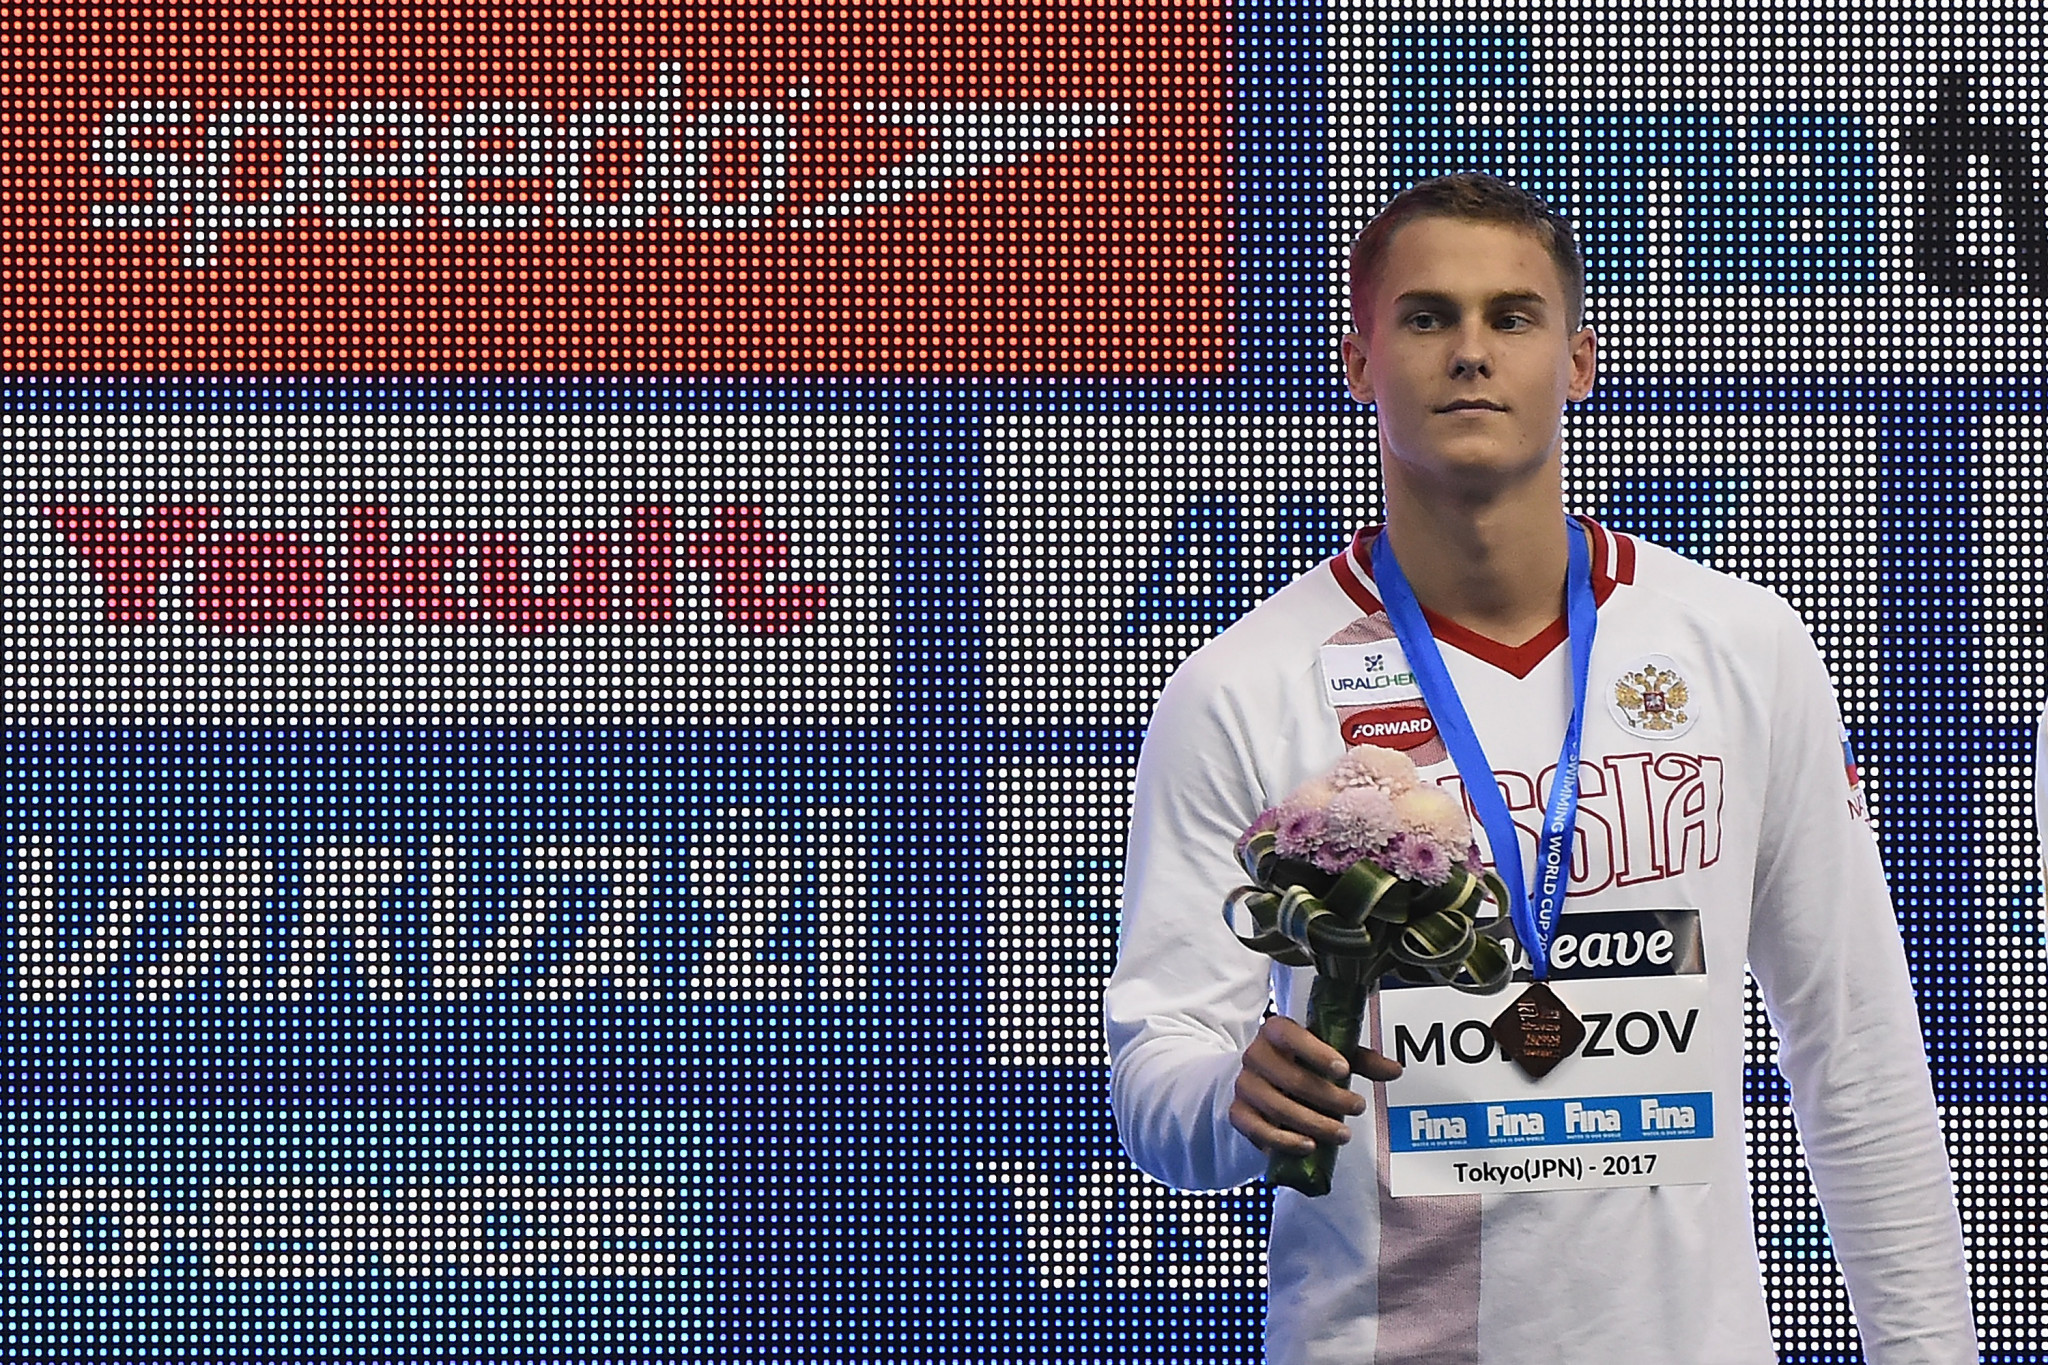 Morozov victories at Singapore FINA World Cup keep champion-elect Le Clos waiting